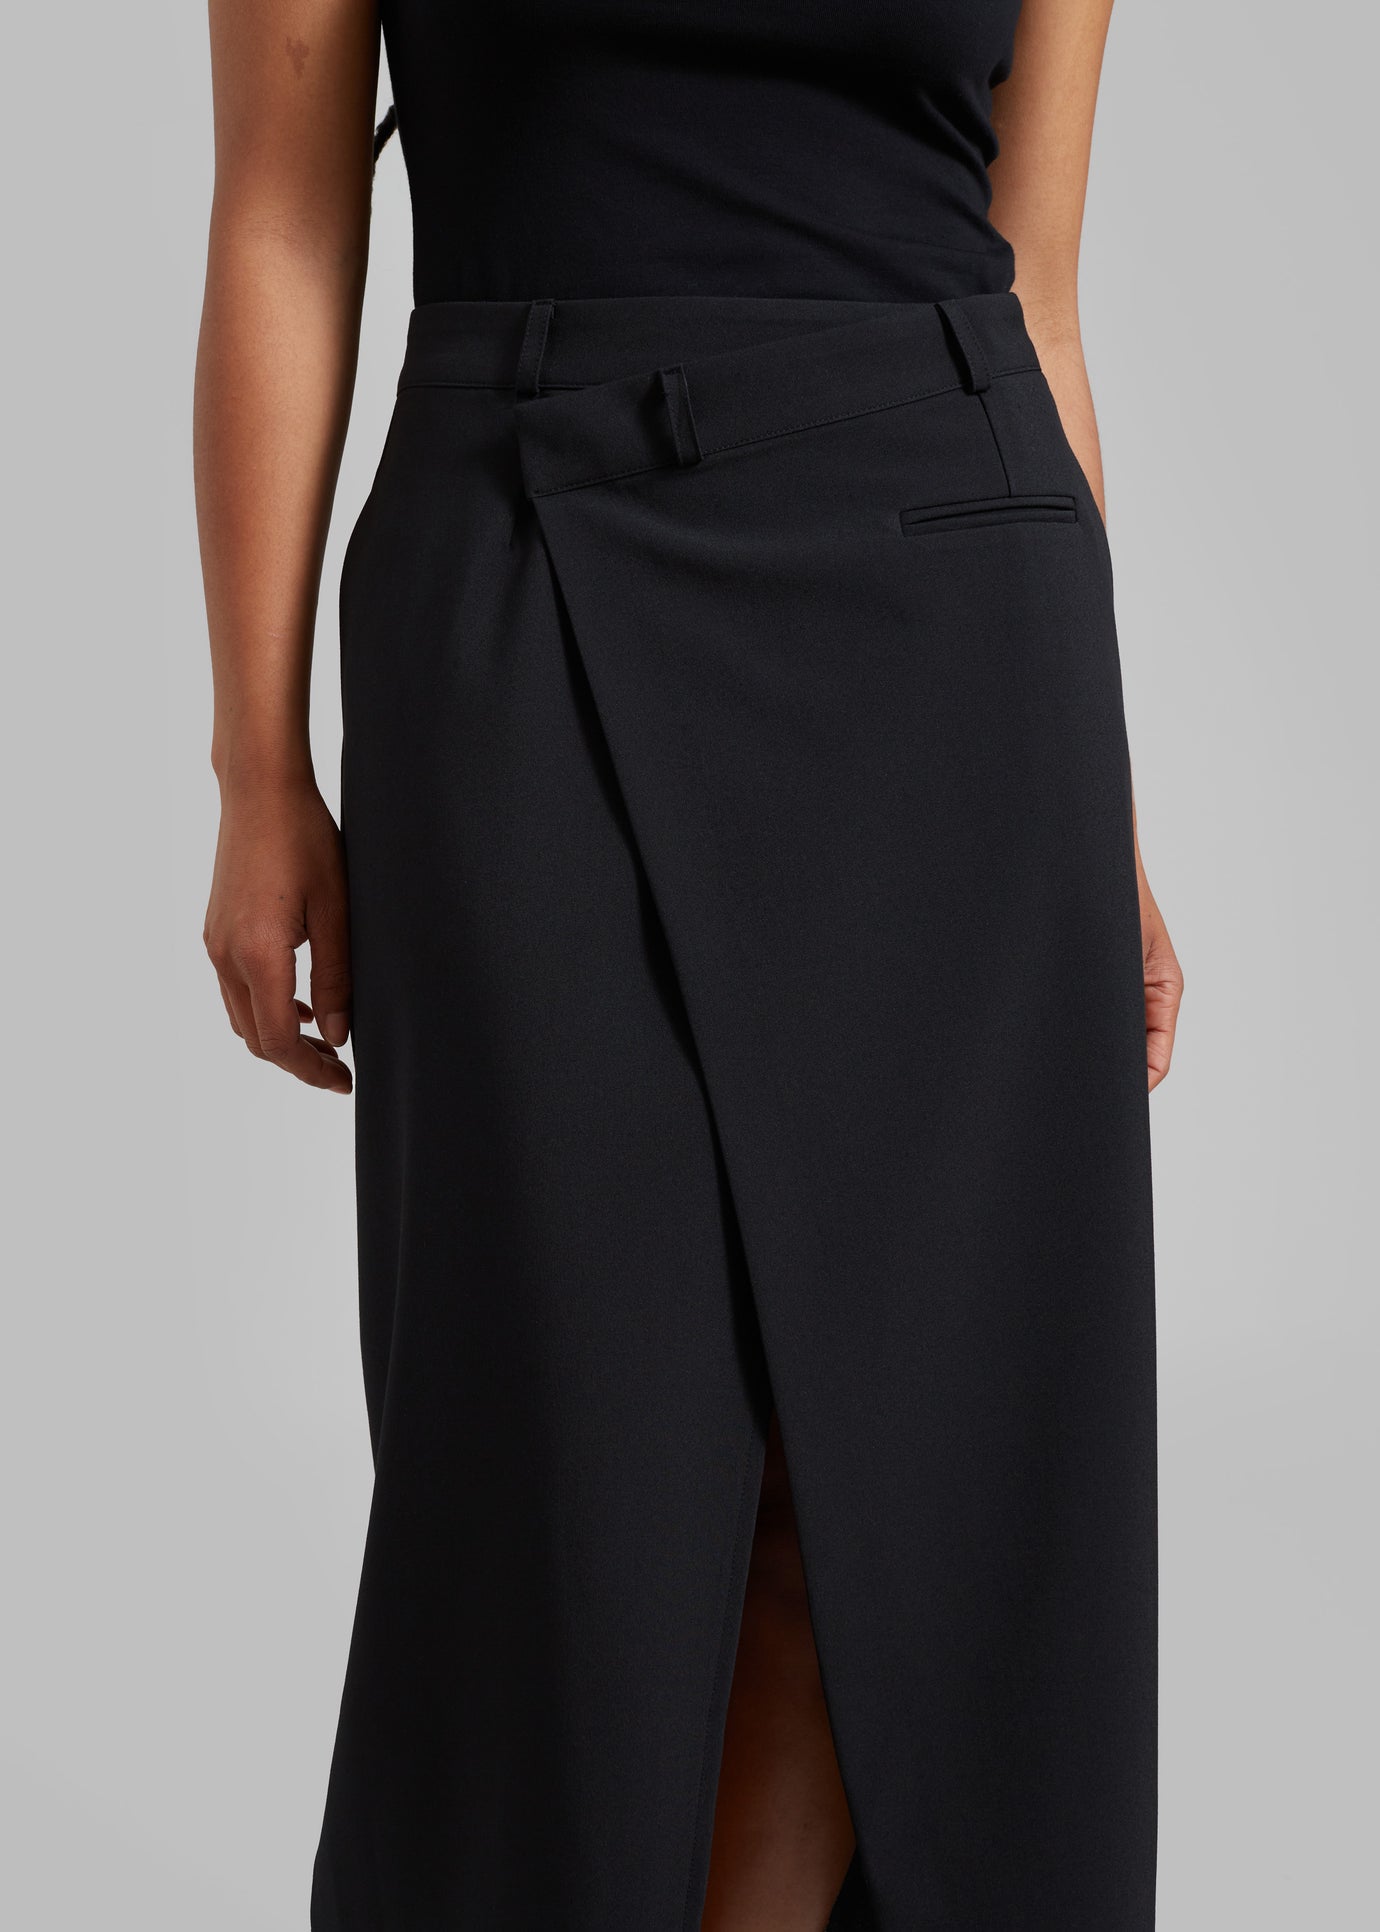 Annabel Asymmetric Midi Skirt - Black - 1